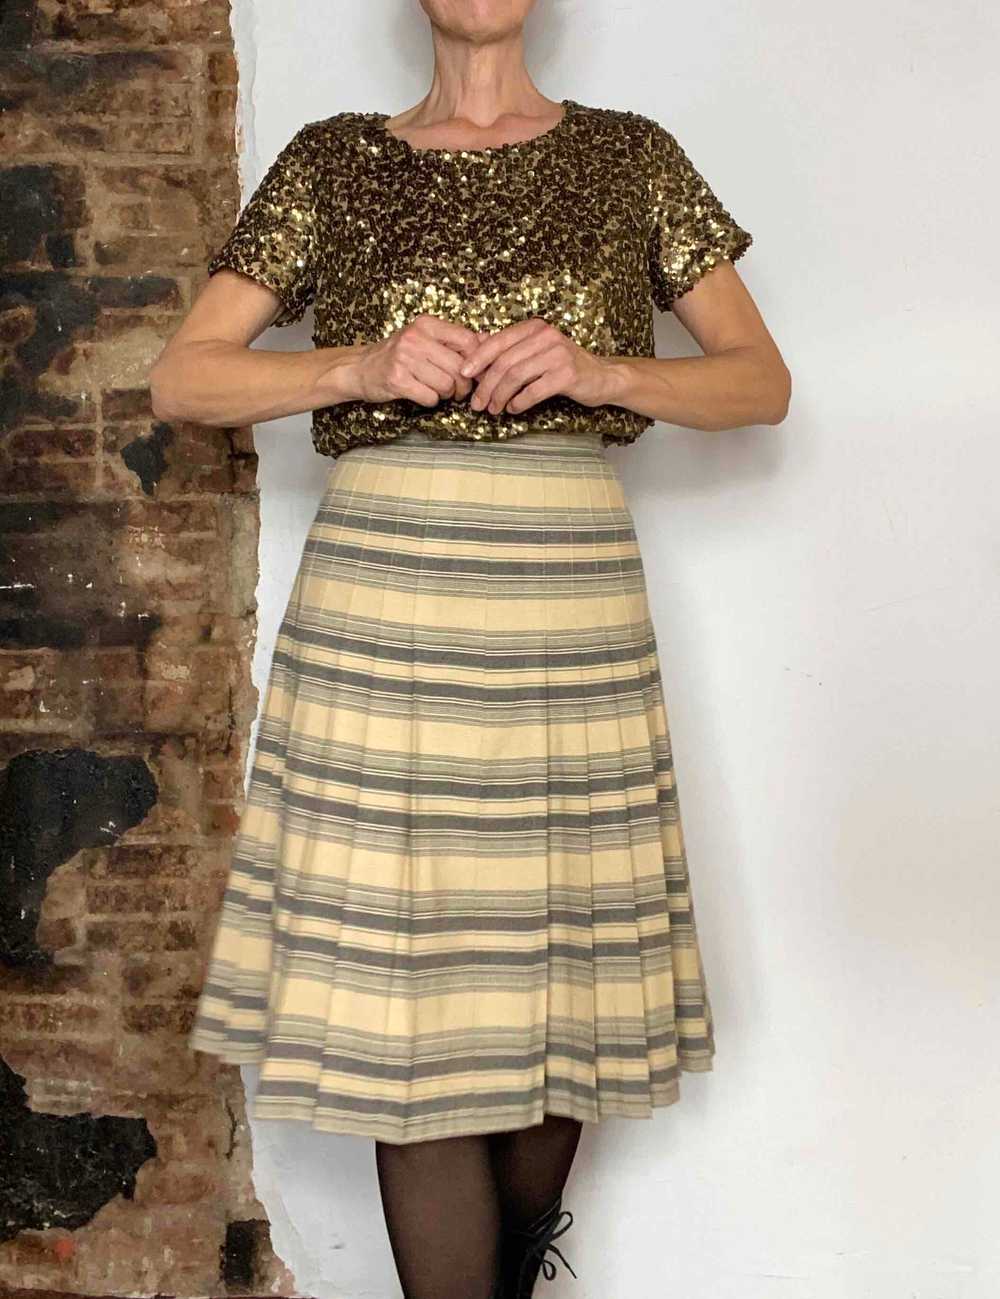 Wool skirt - Scottish plaid skirt from the 70s-80s - image 5